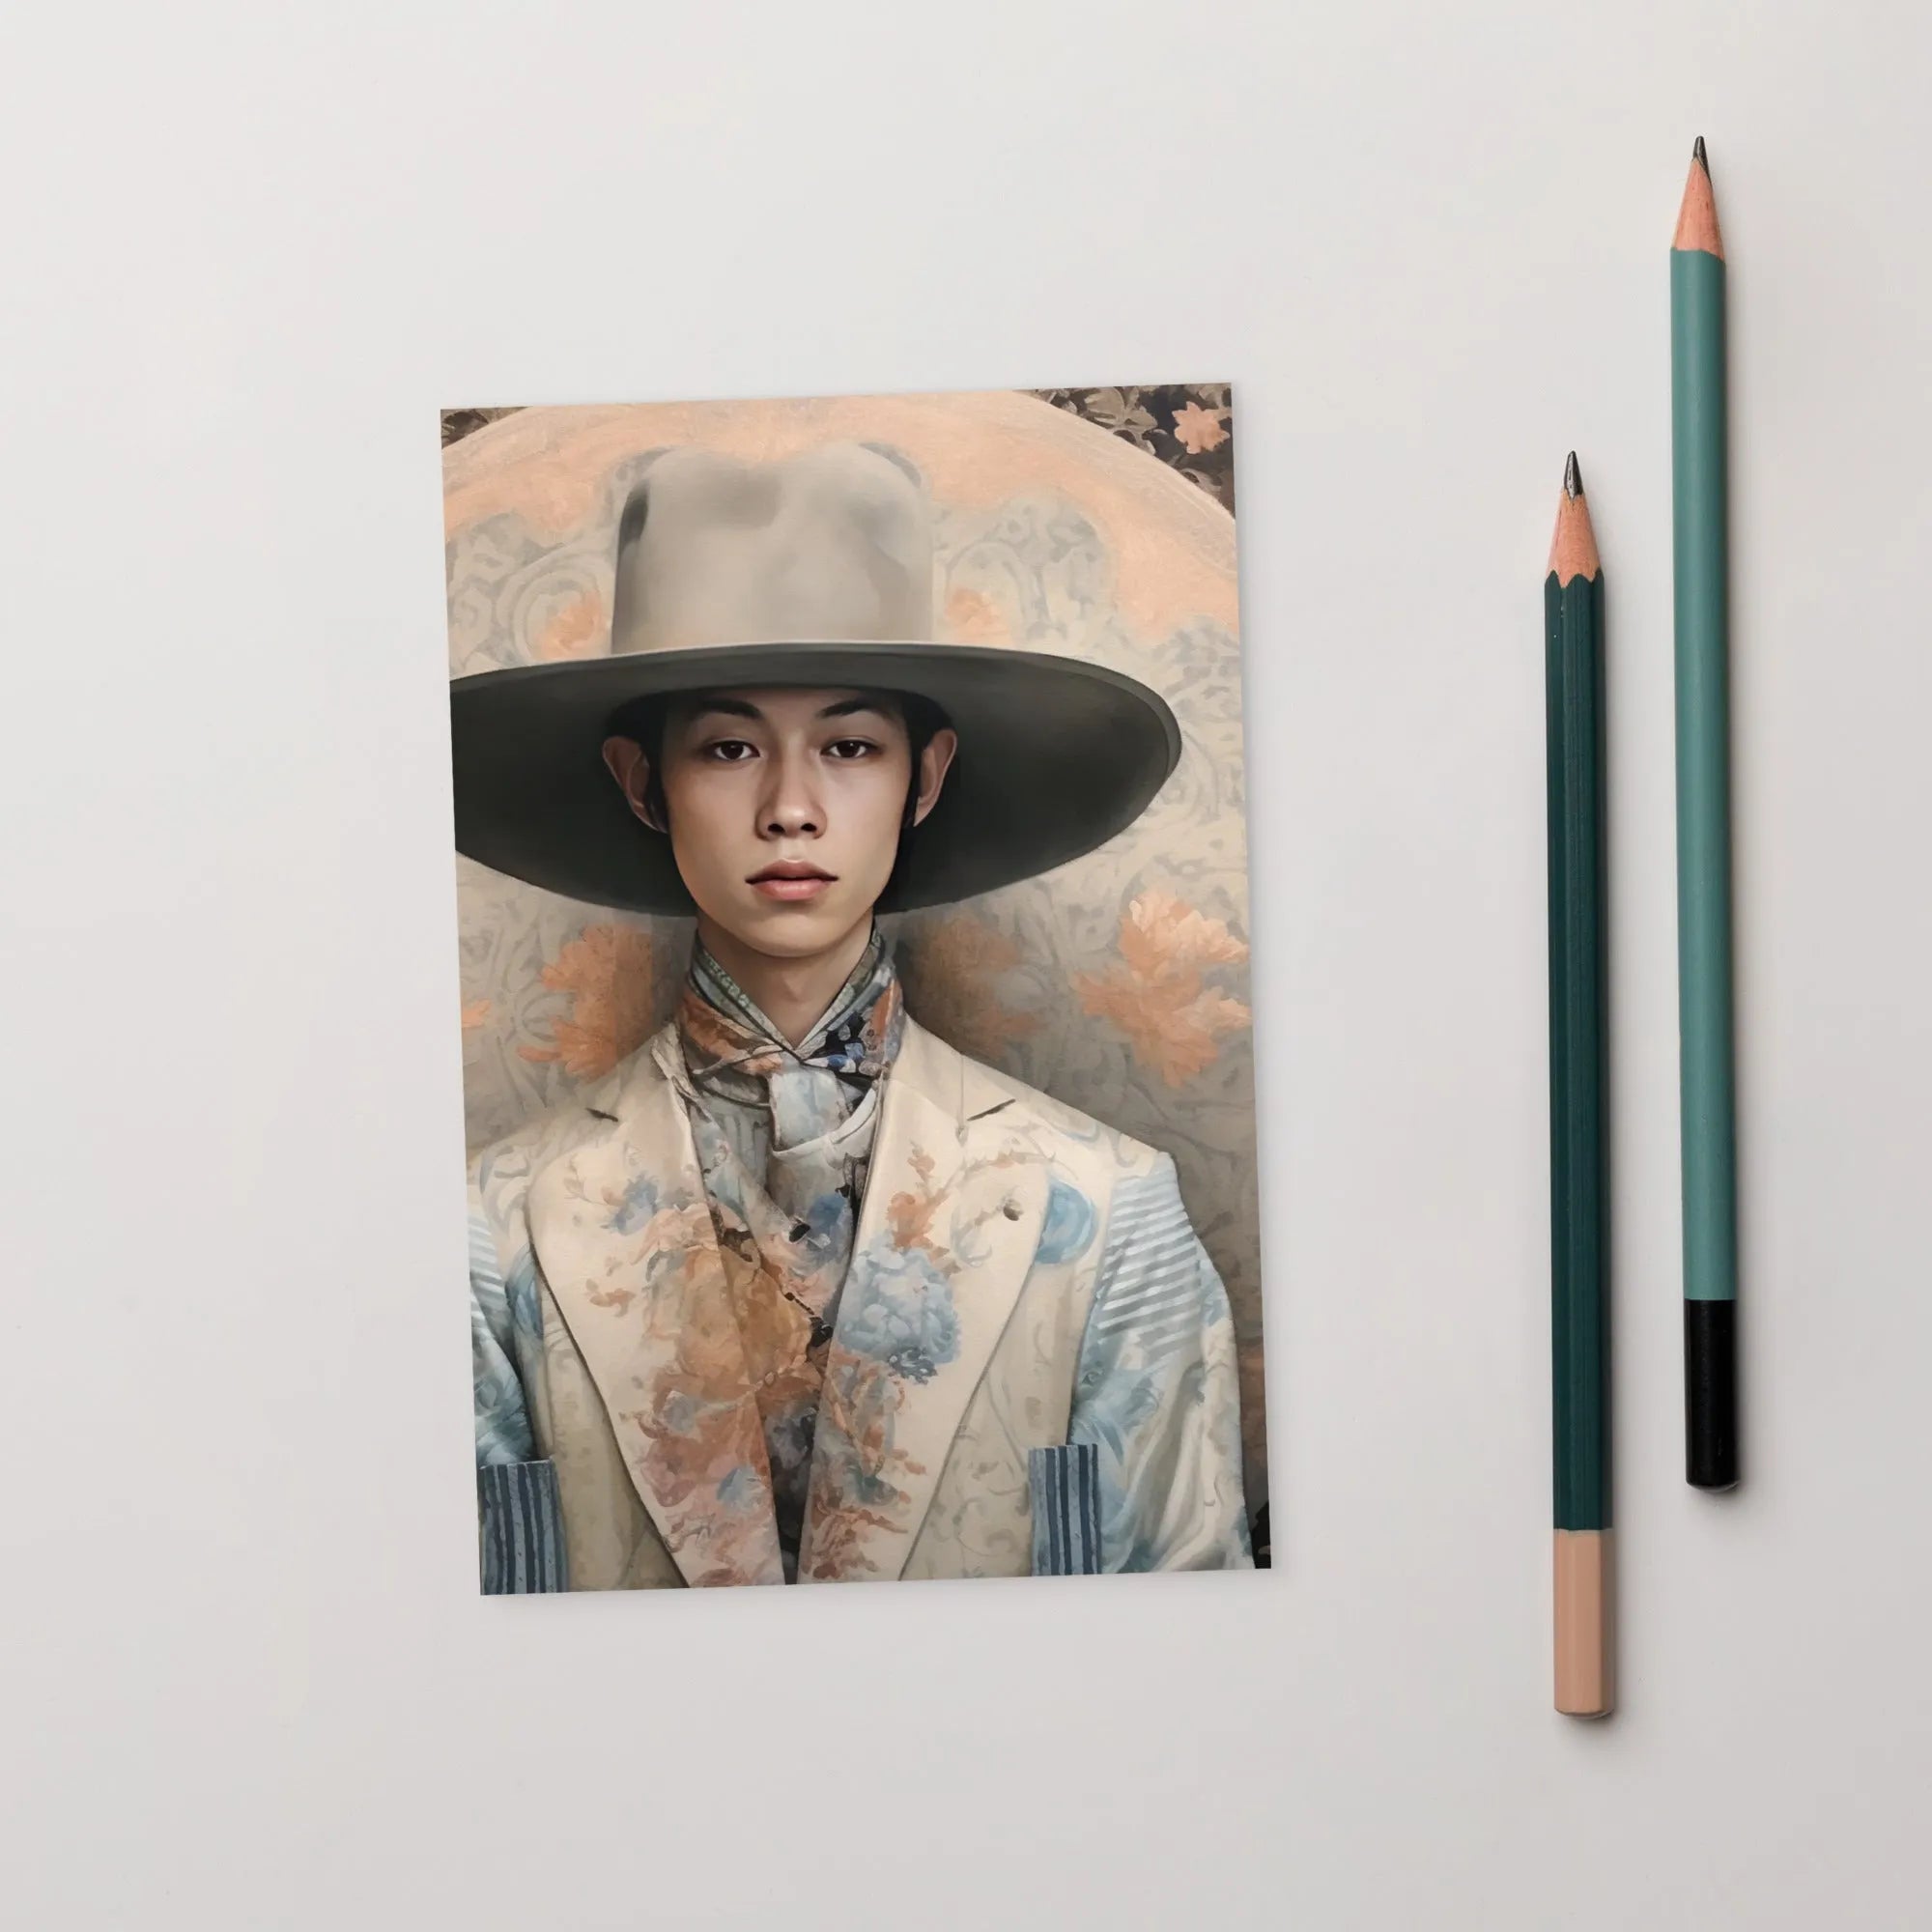 Thuanthong The Transgender Cowboy - Dandy Thai F2m Art Print - 4’x6’ - Posters Prints & Visual Artwork - Aesthetic Art